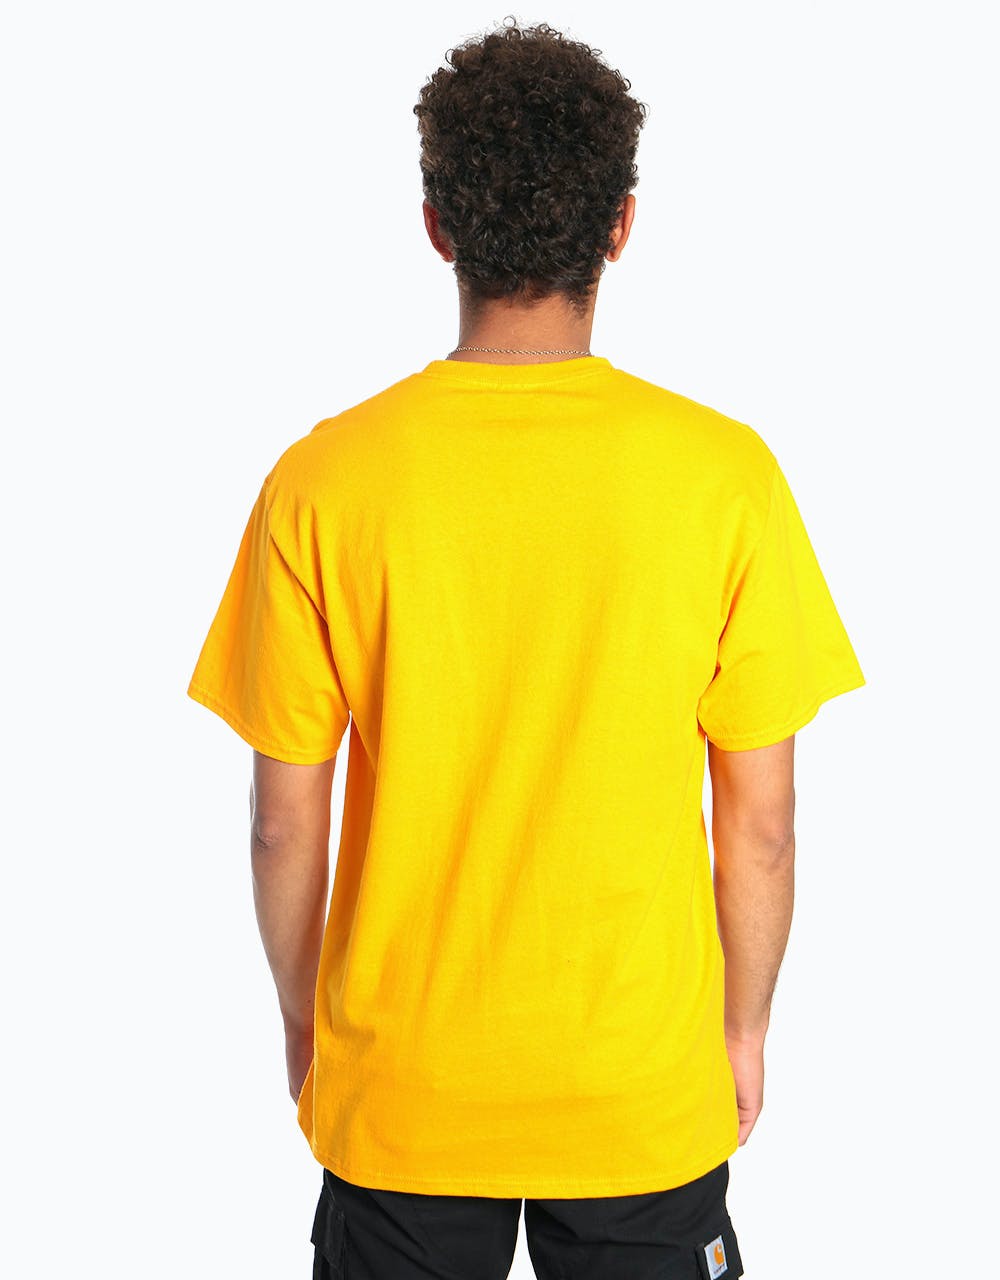 Primitive x Dragon Ball Super Shadow Vegeta T-Shirt - Gold